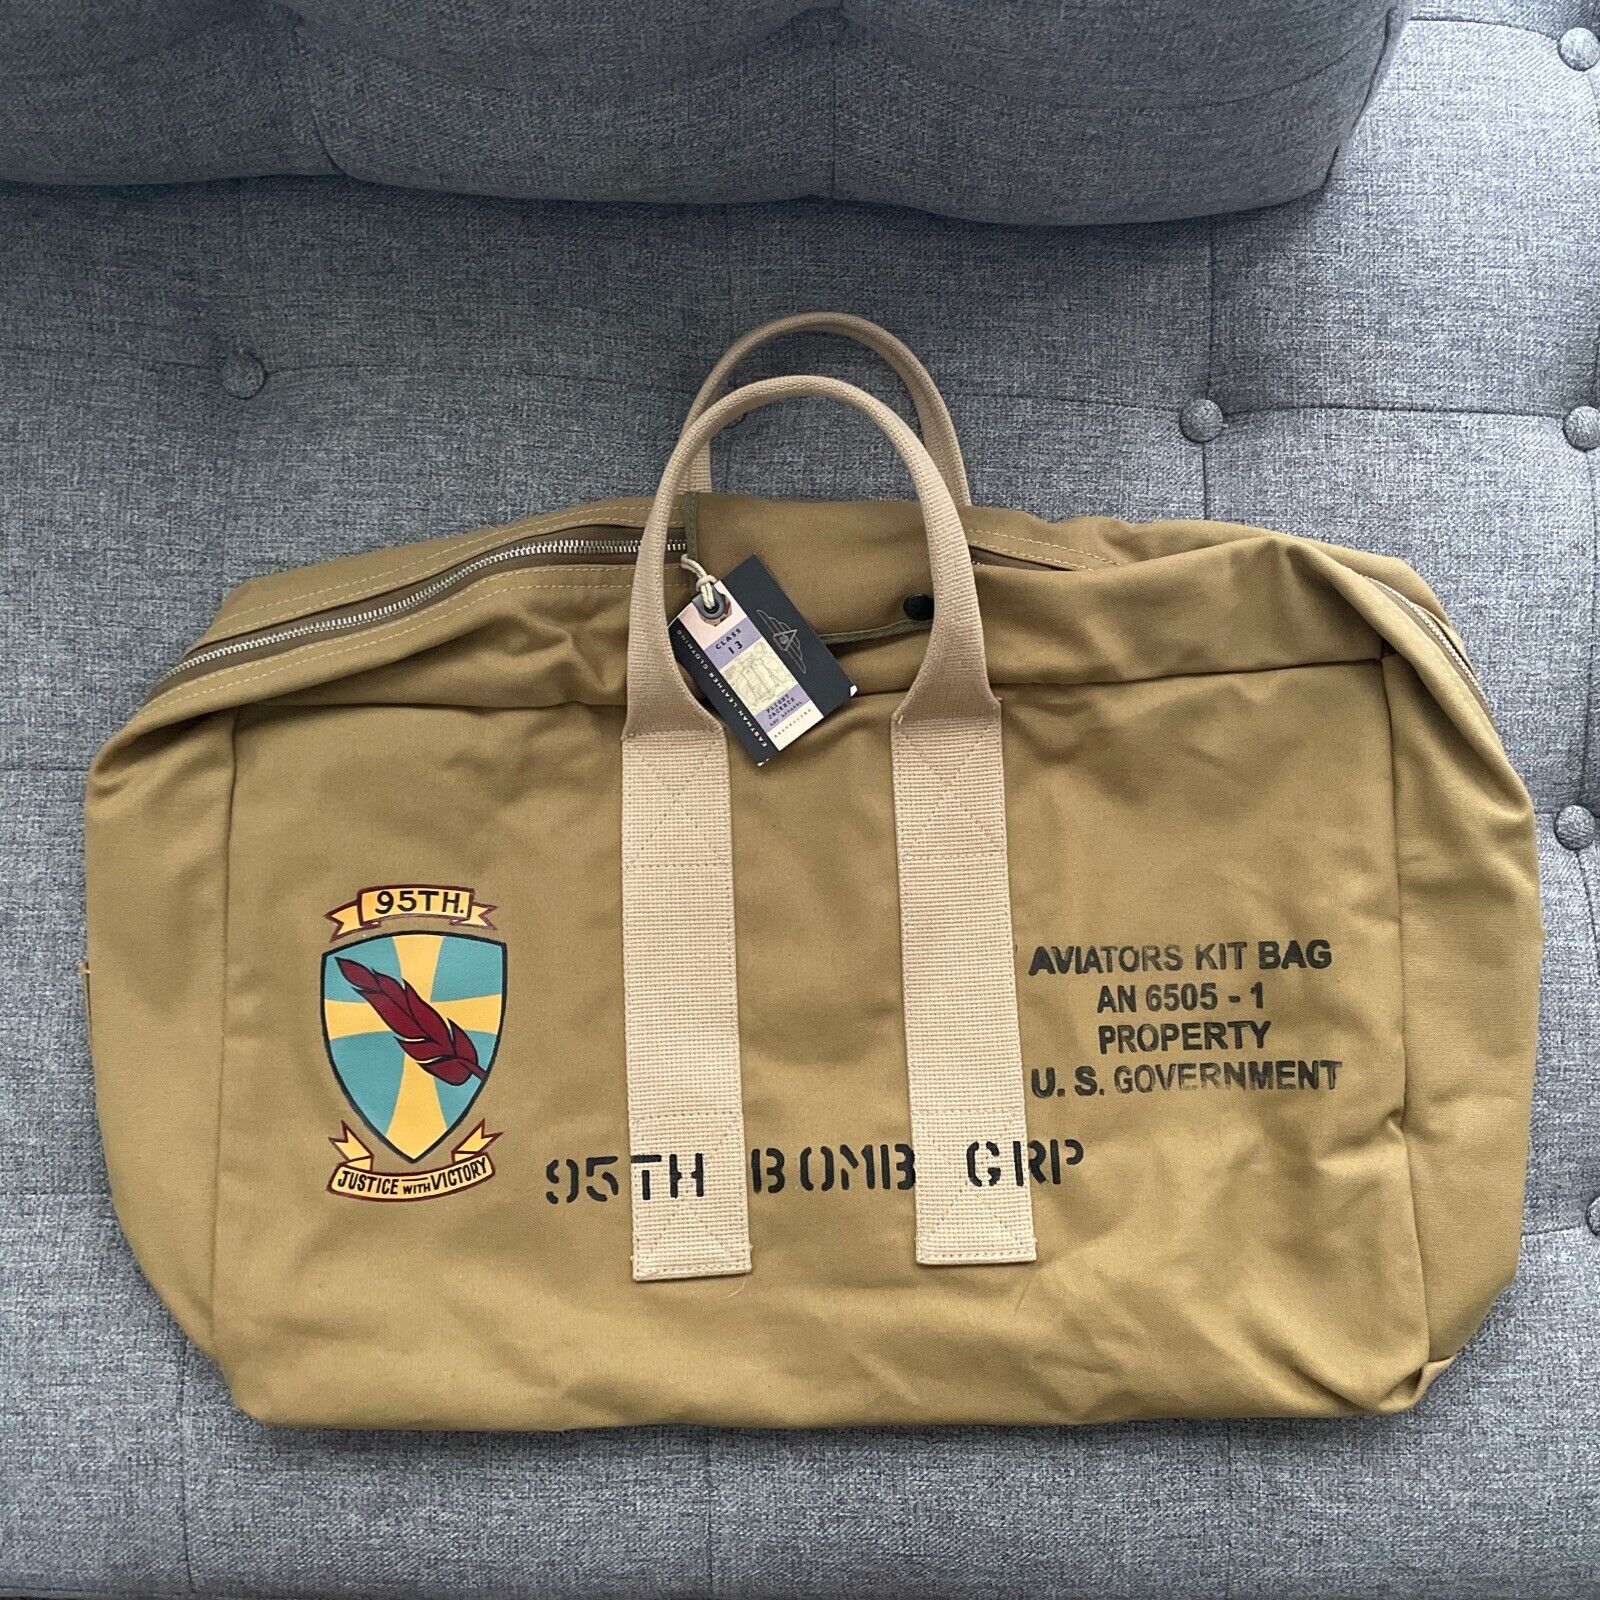 Eastman leather company aviators kit bag 95Th Bomb Group ￼new $339